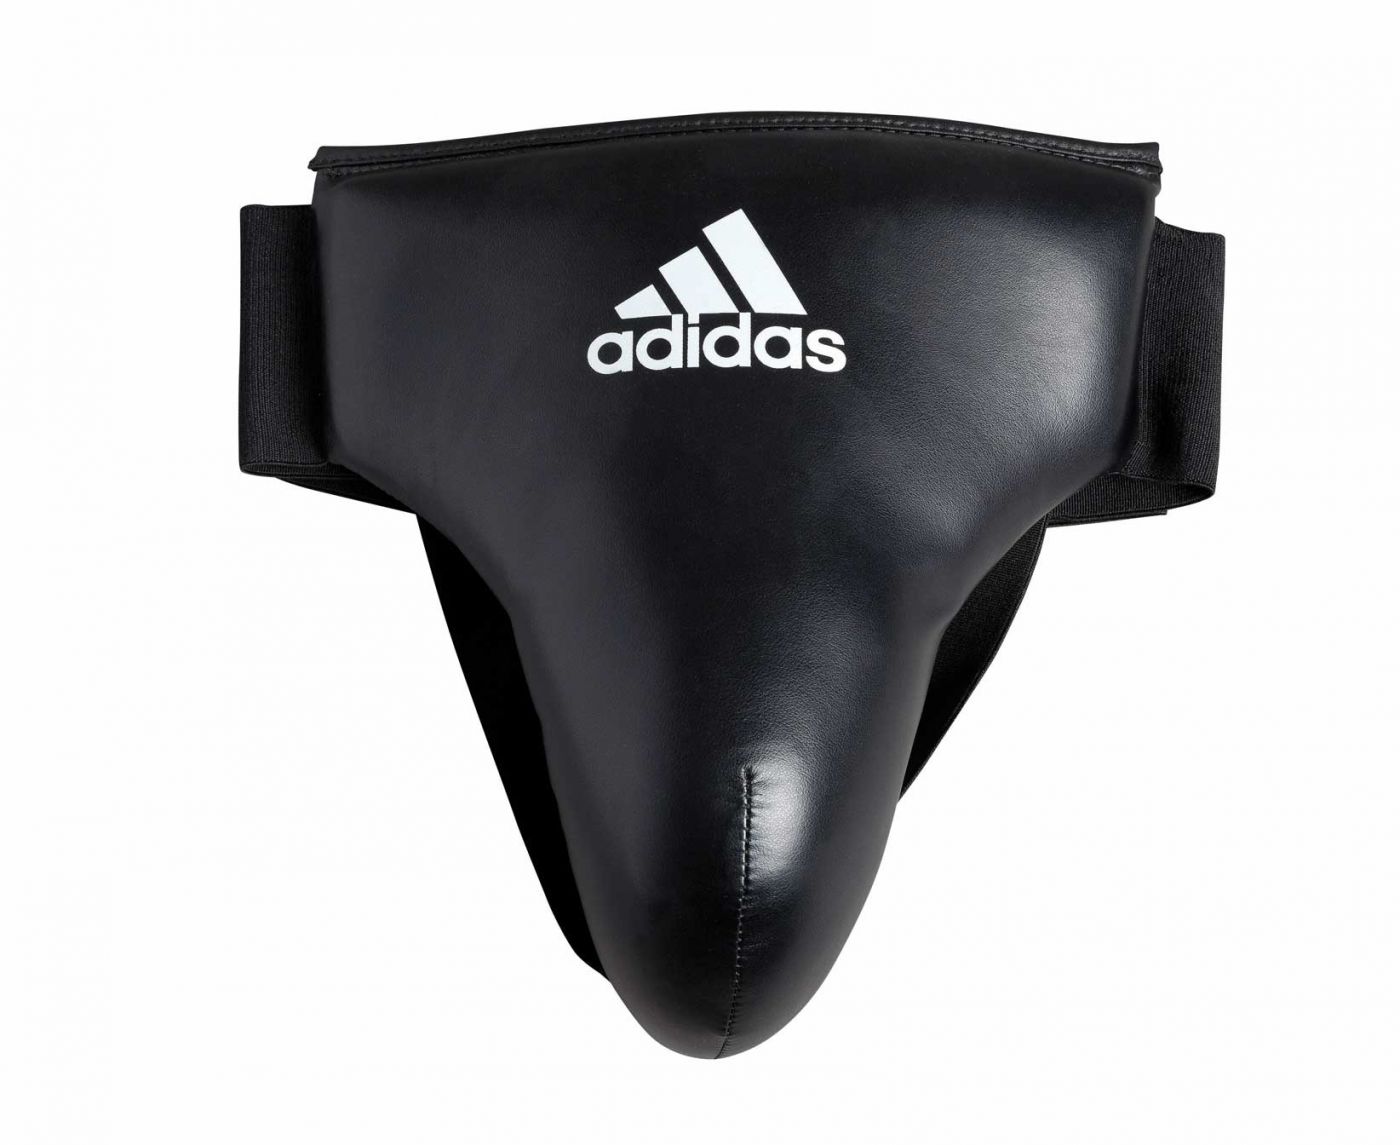 Защита паха Adidas мужская Anatomical Groin Guard черная, размер M, артикул adiBP05